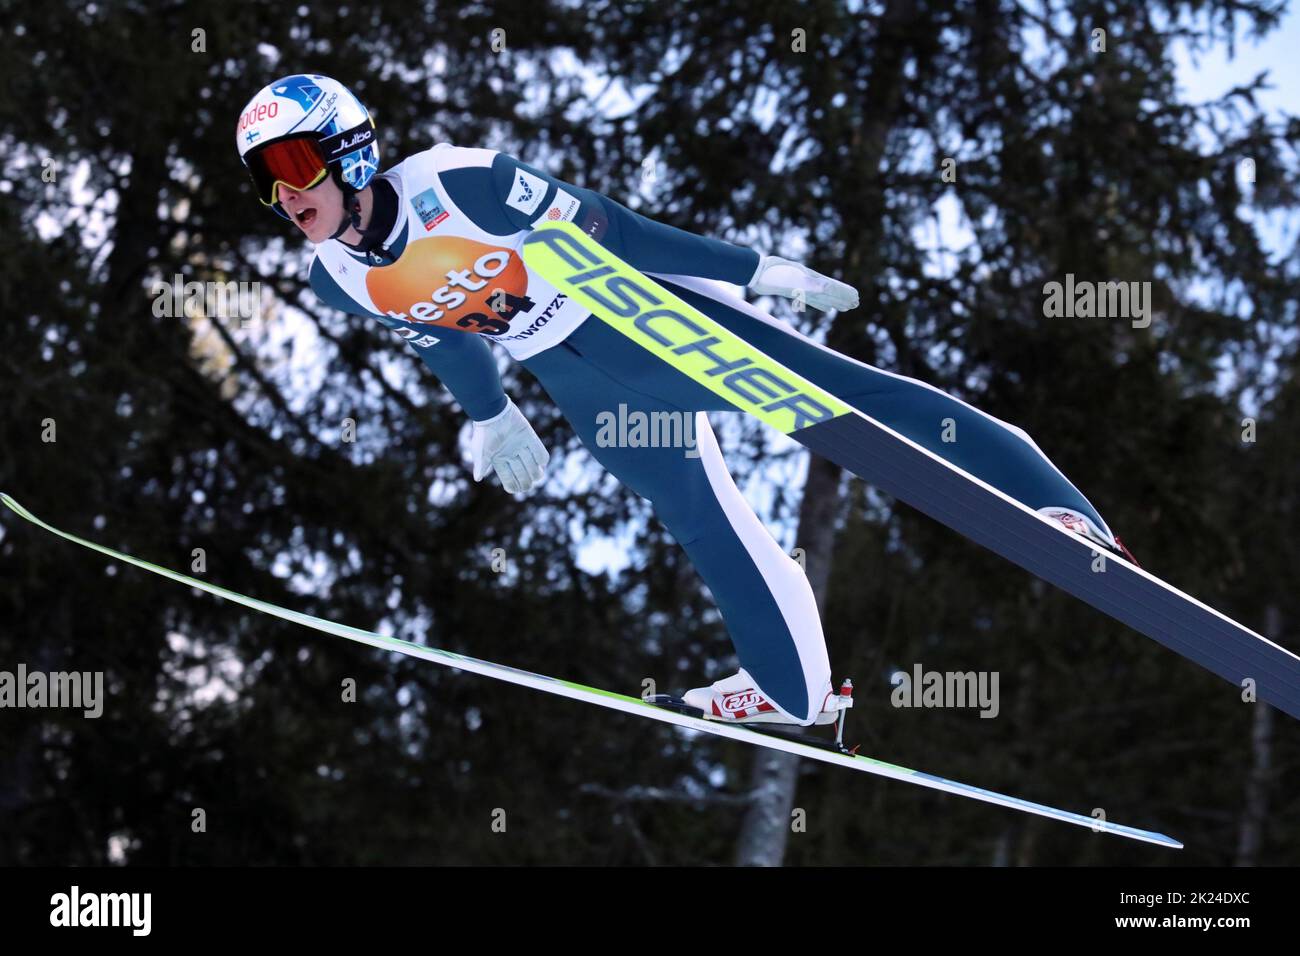 Niko Kytosaho (Finnland) beim FIS Weltcup Skispringen Qualifikation Titisee-Neustadt Stock Photo